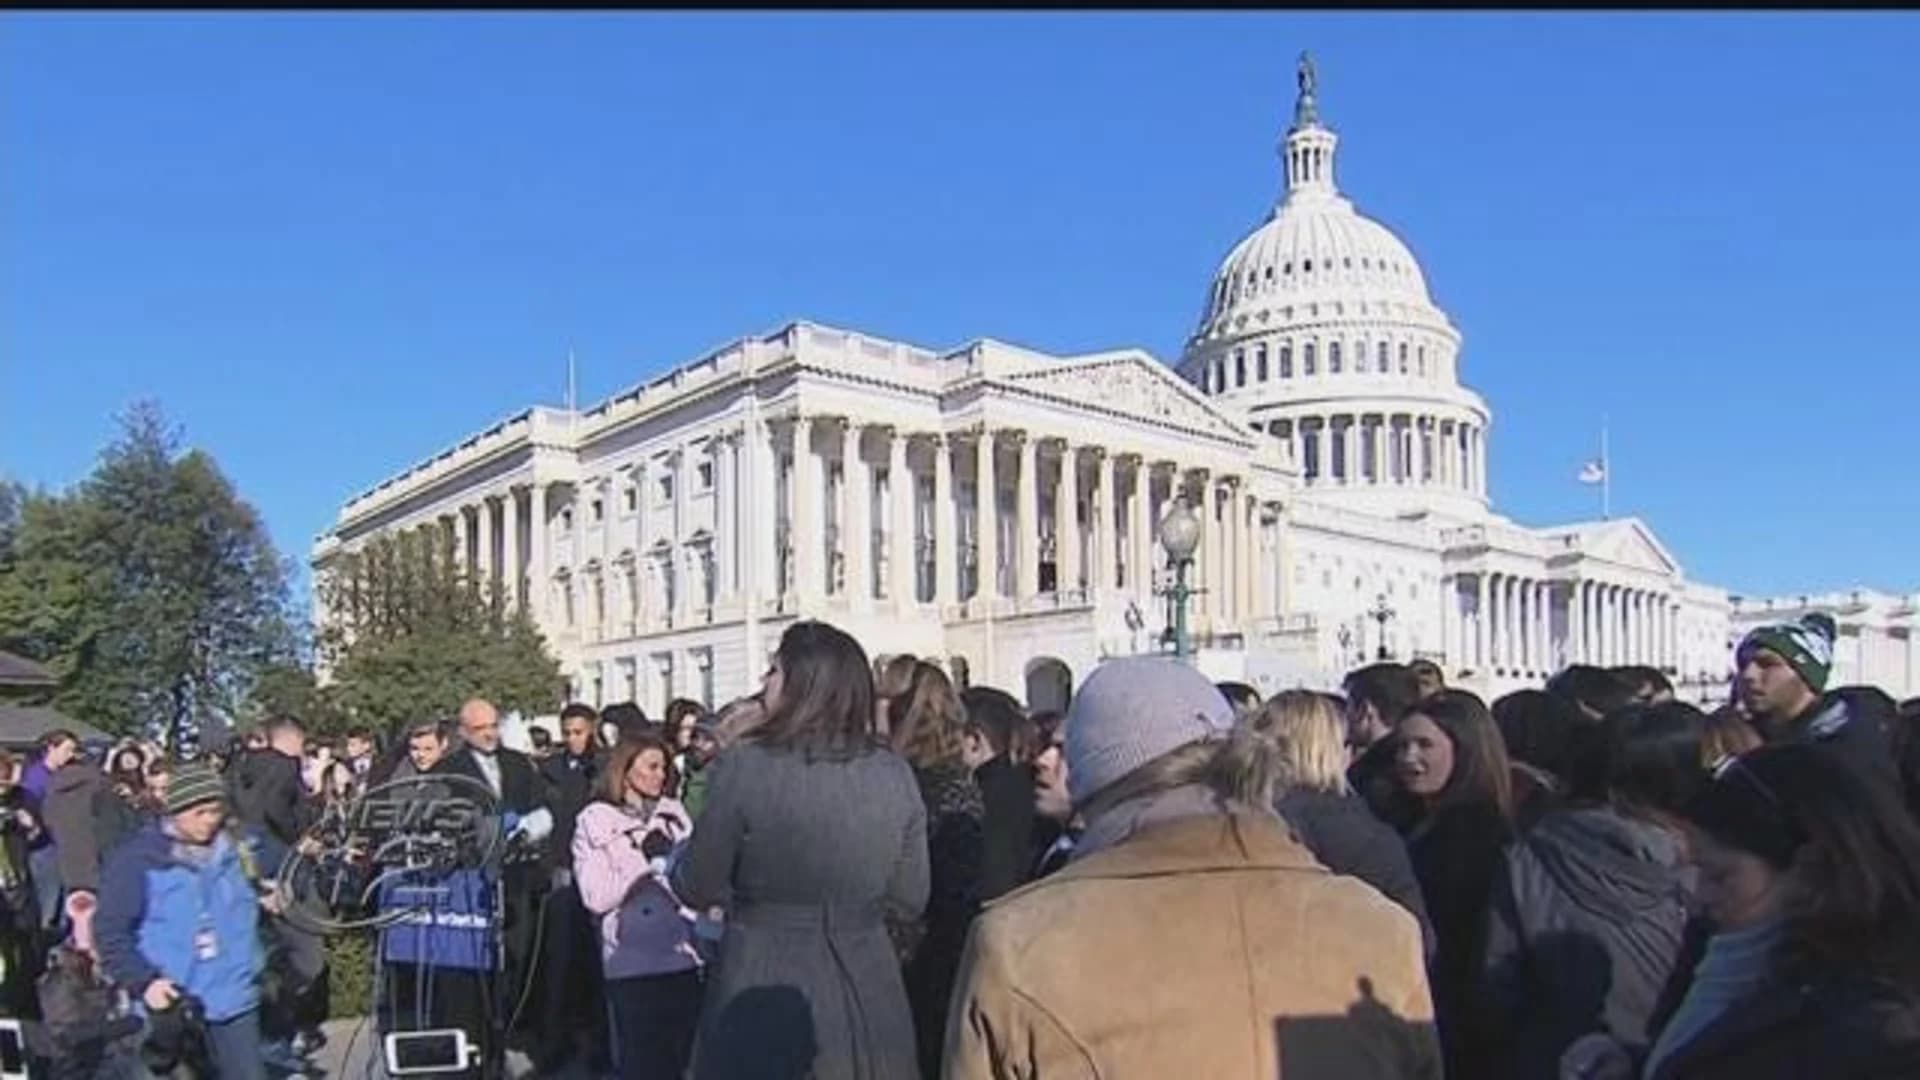 Protesters gather in Washington, demanding gun control